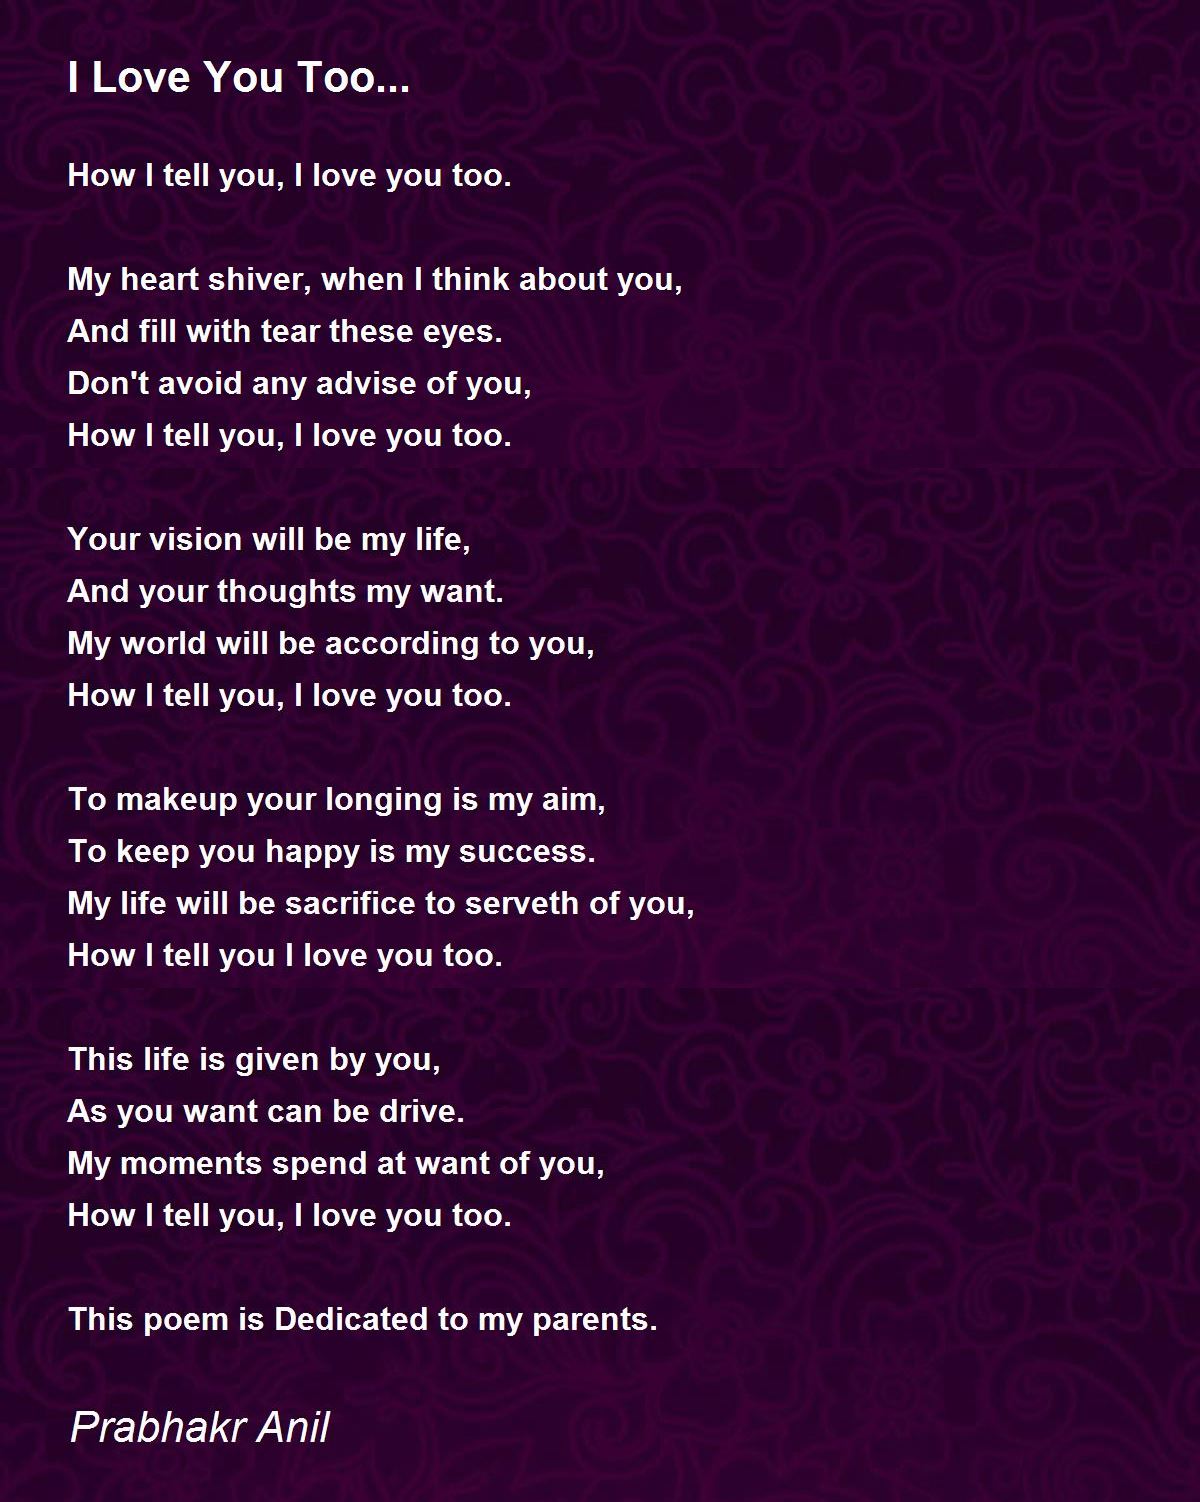 I Love You Too... - I Love You Too... Poem by Prabhakr Anil